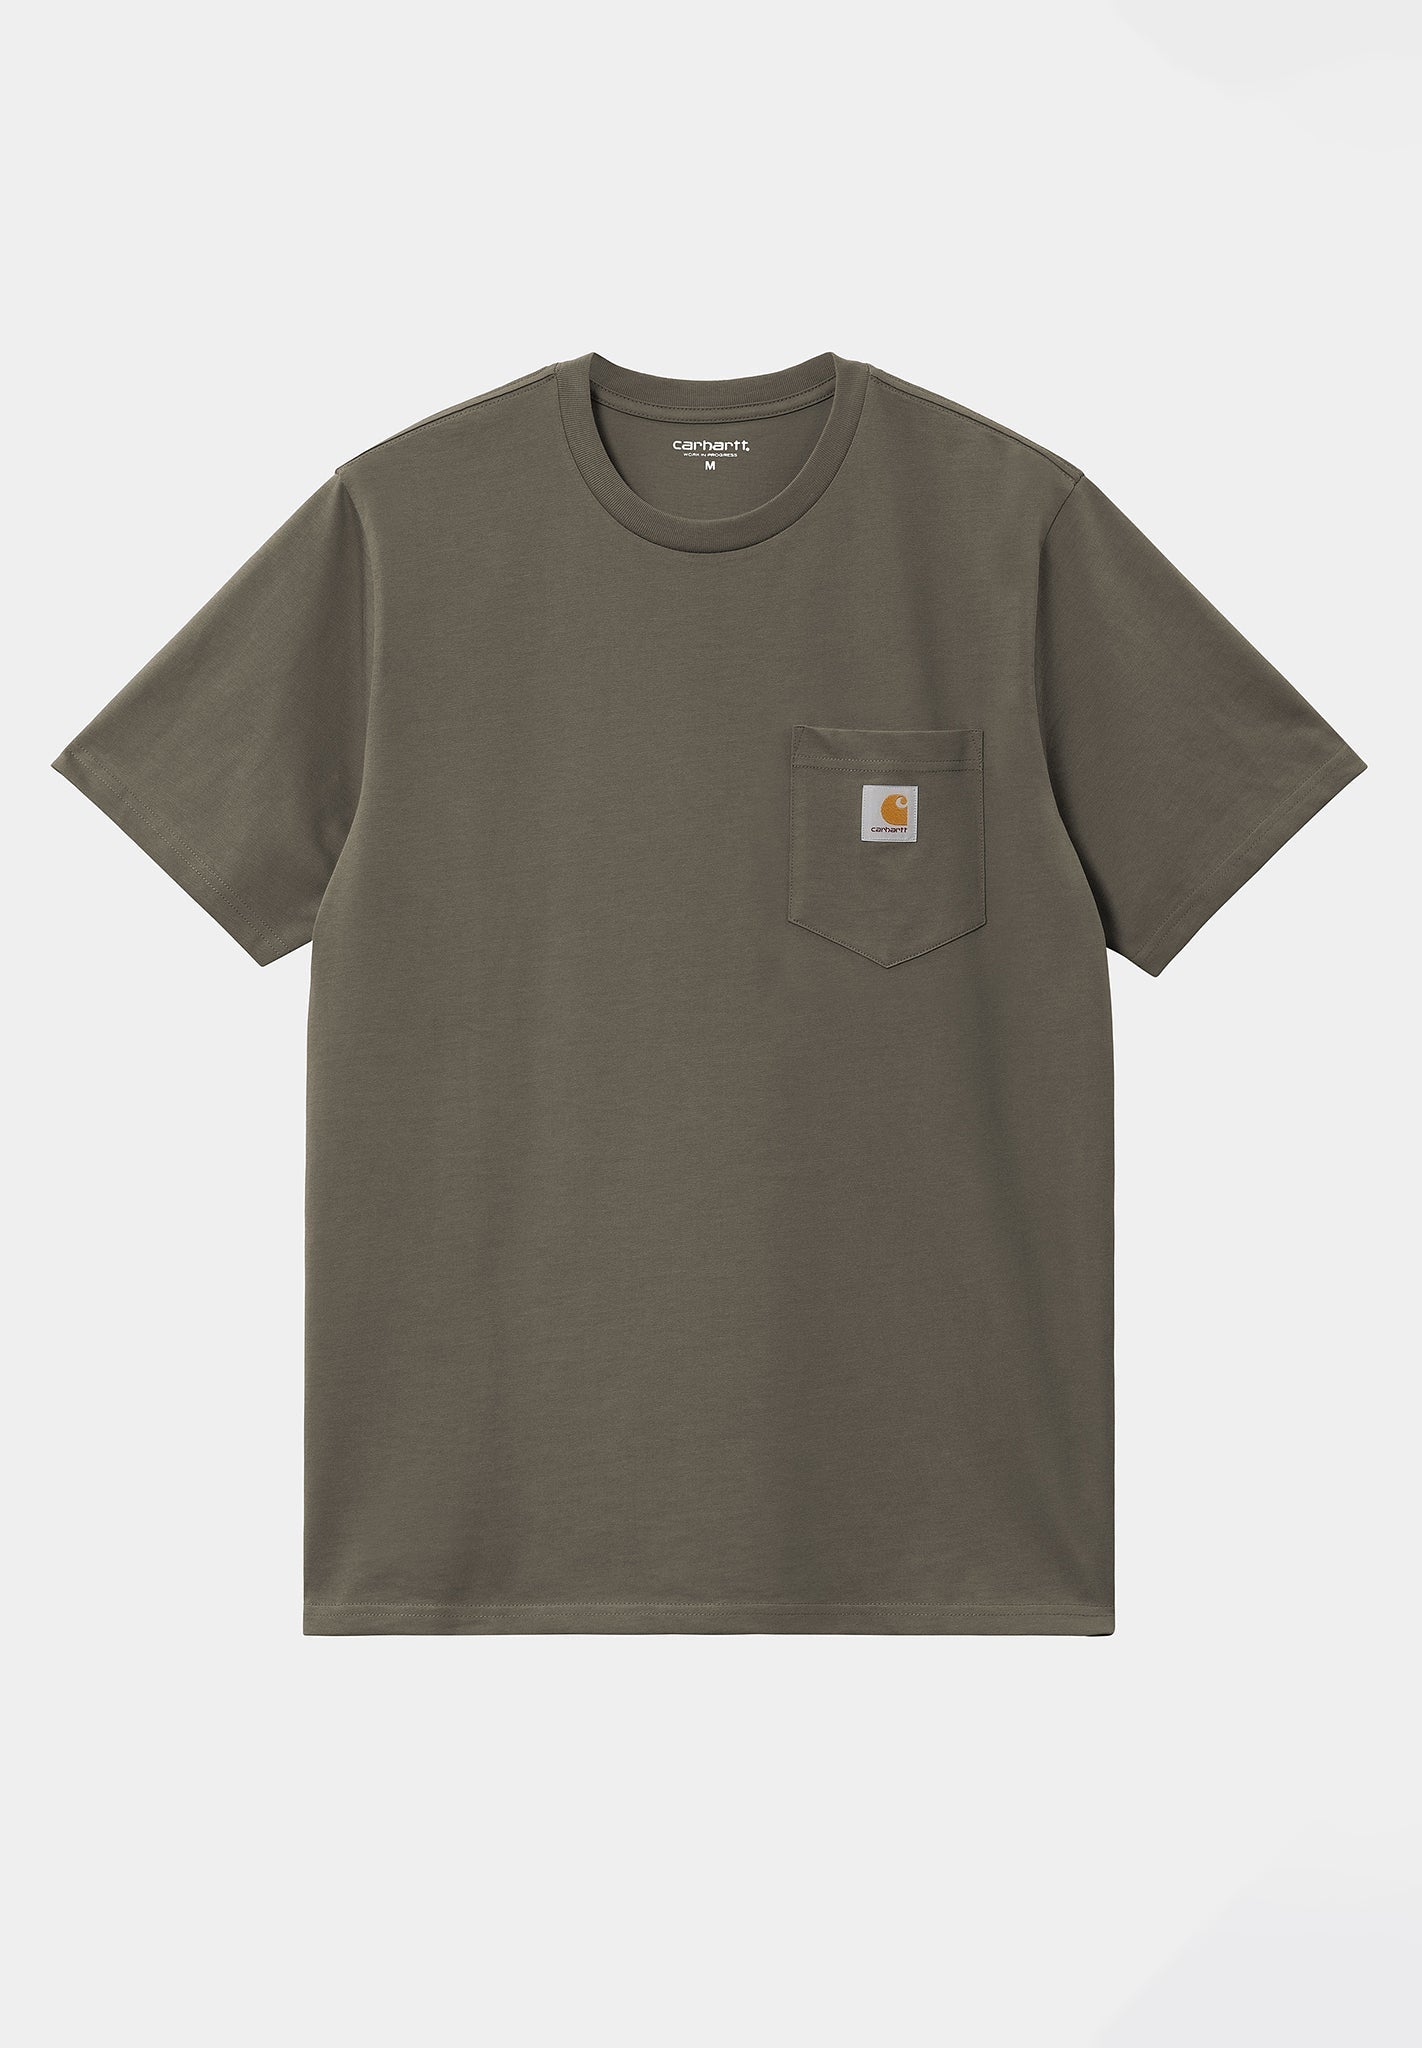 CARHARTT WIP - S/S Pocket T - Shirt - BACKYARD